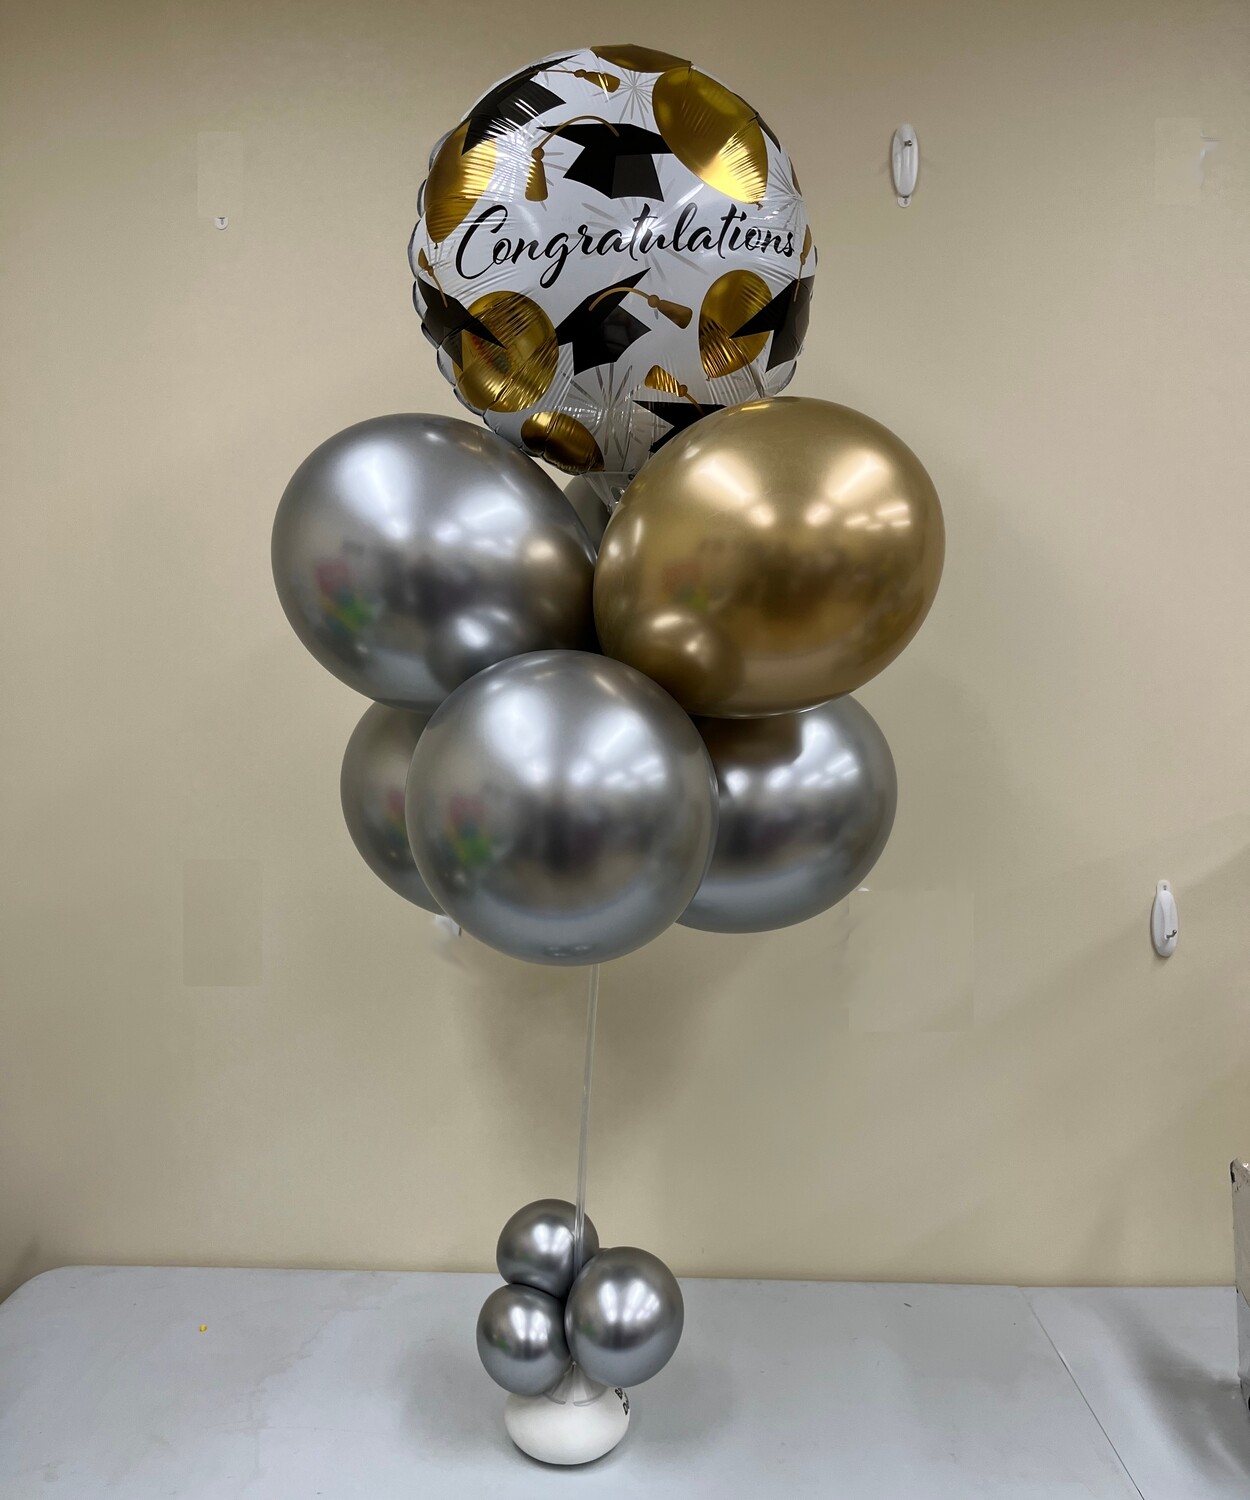 Metallics Grad 7 balloon bouquet delivery in metallics and black